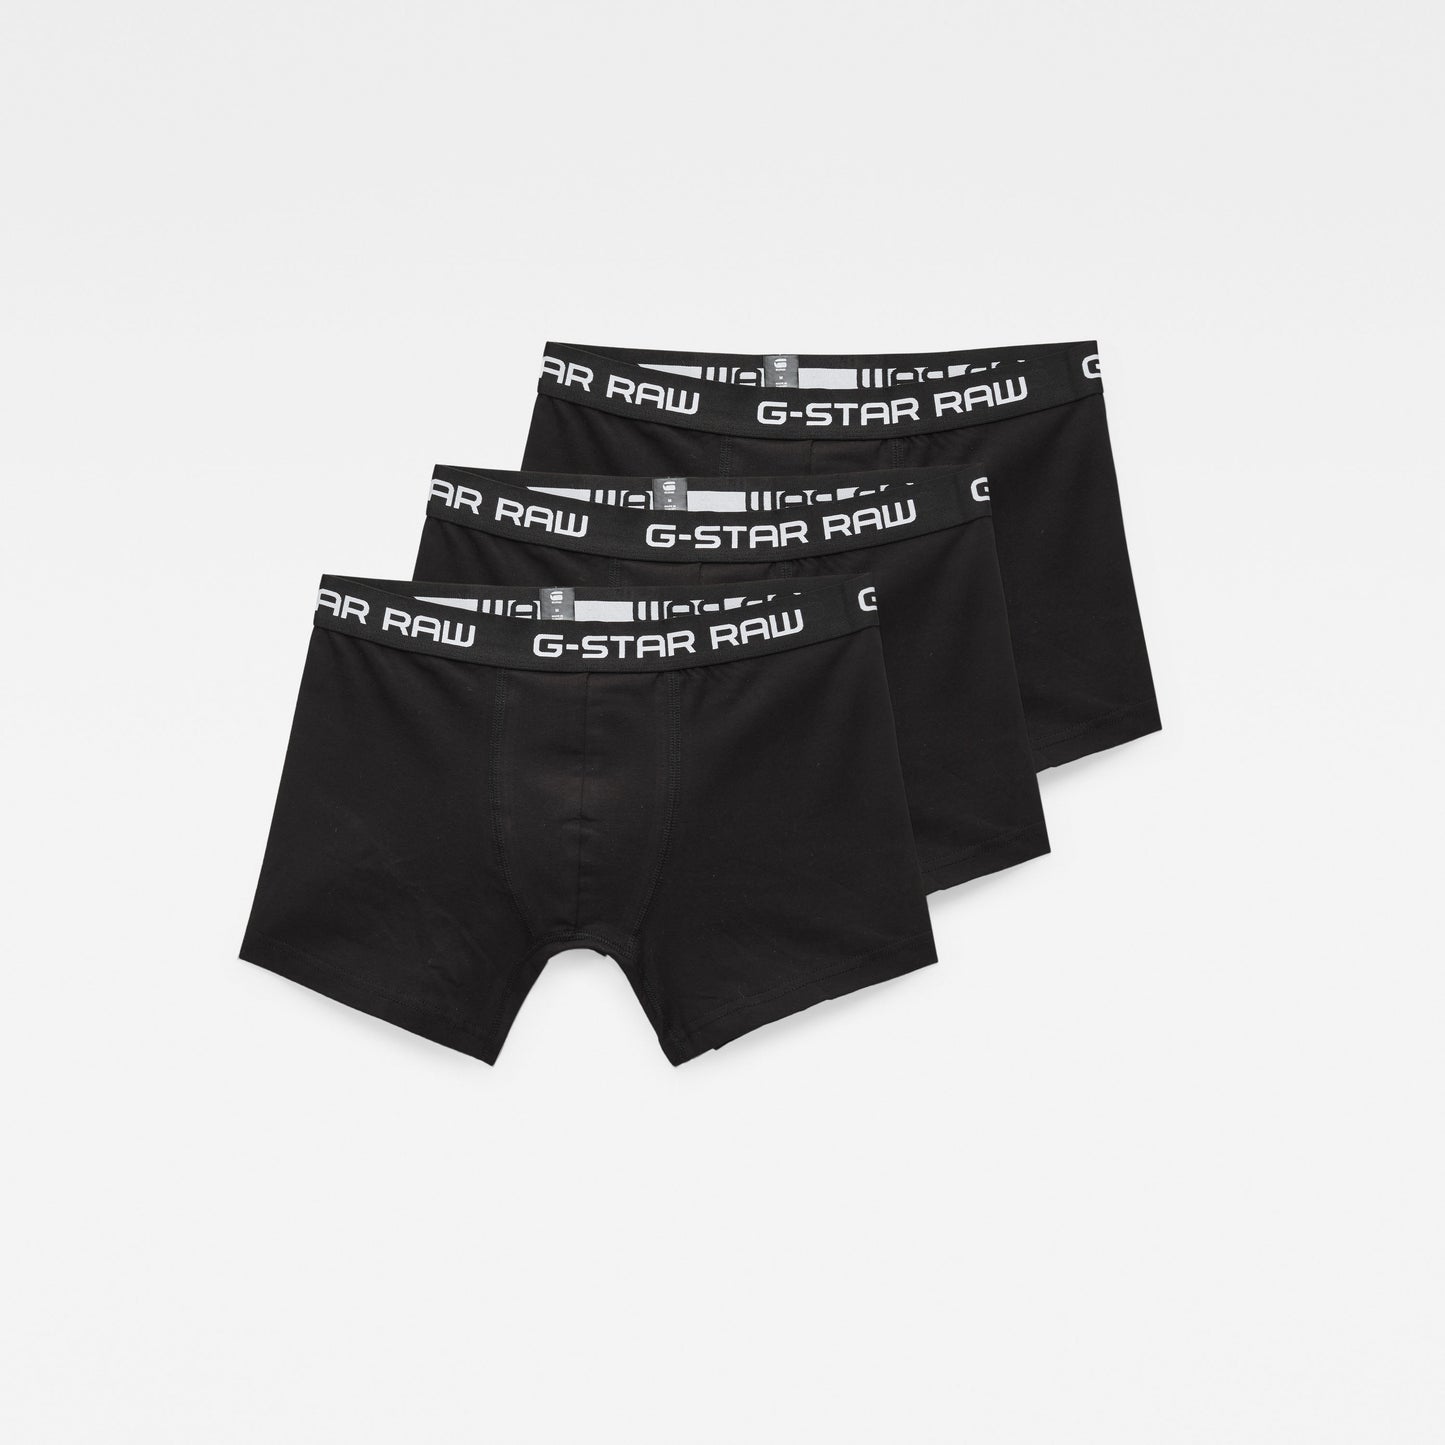 G-Star Classic Black Boxer Shorts (3 Pack)